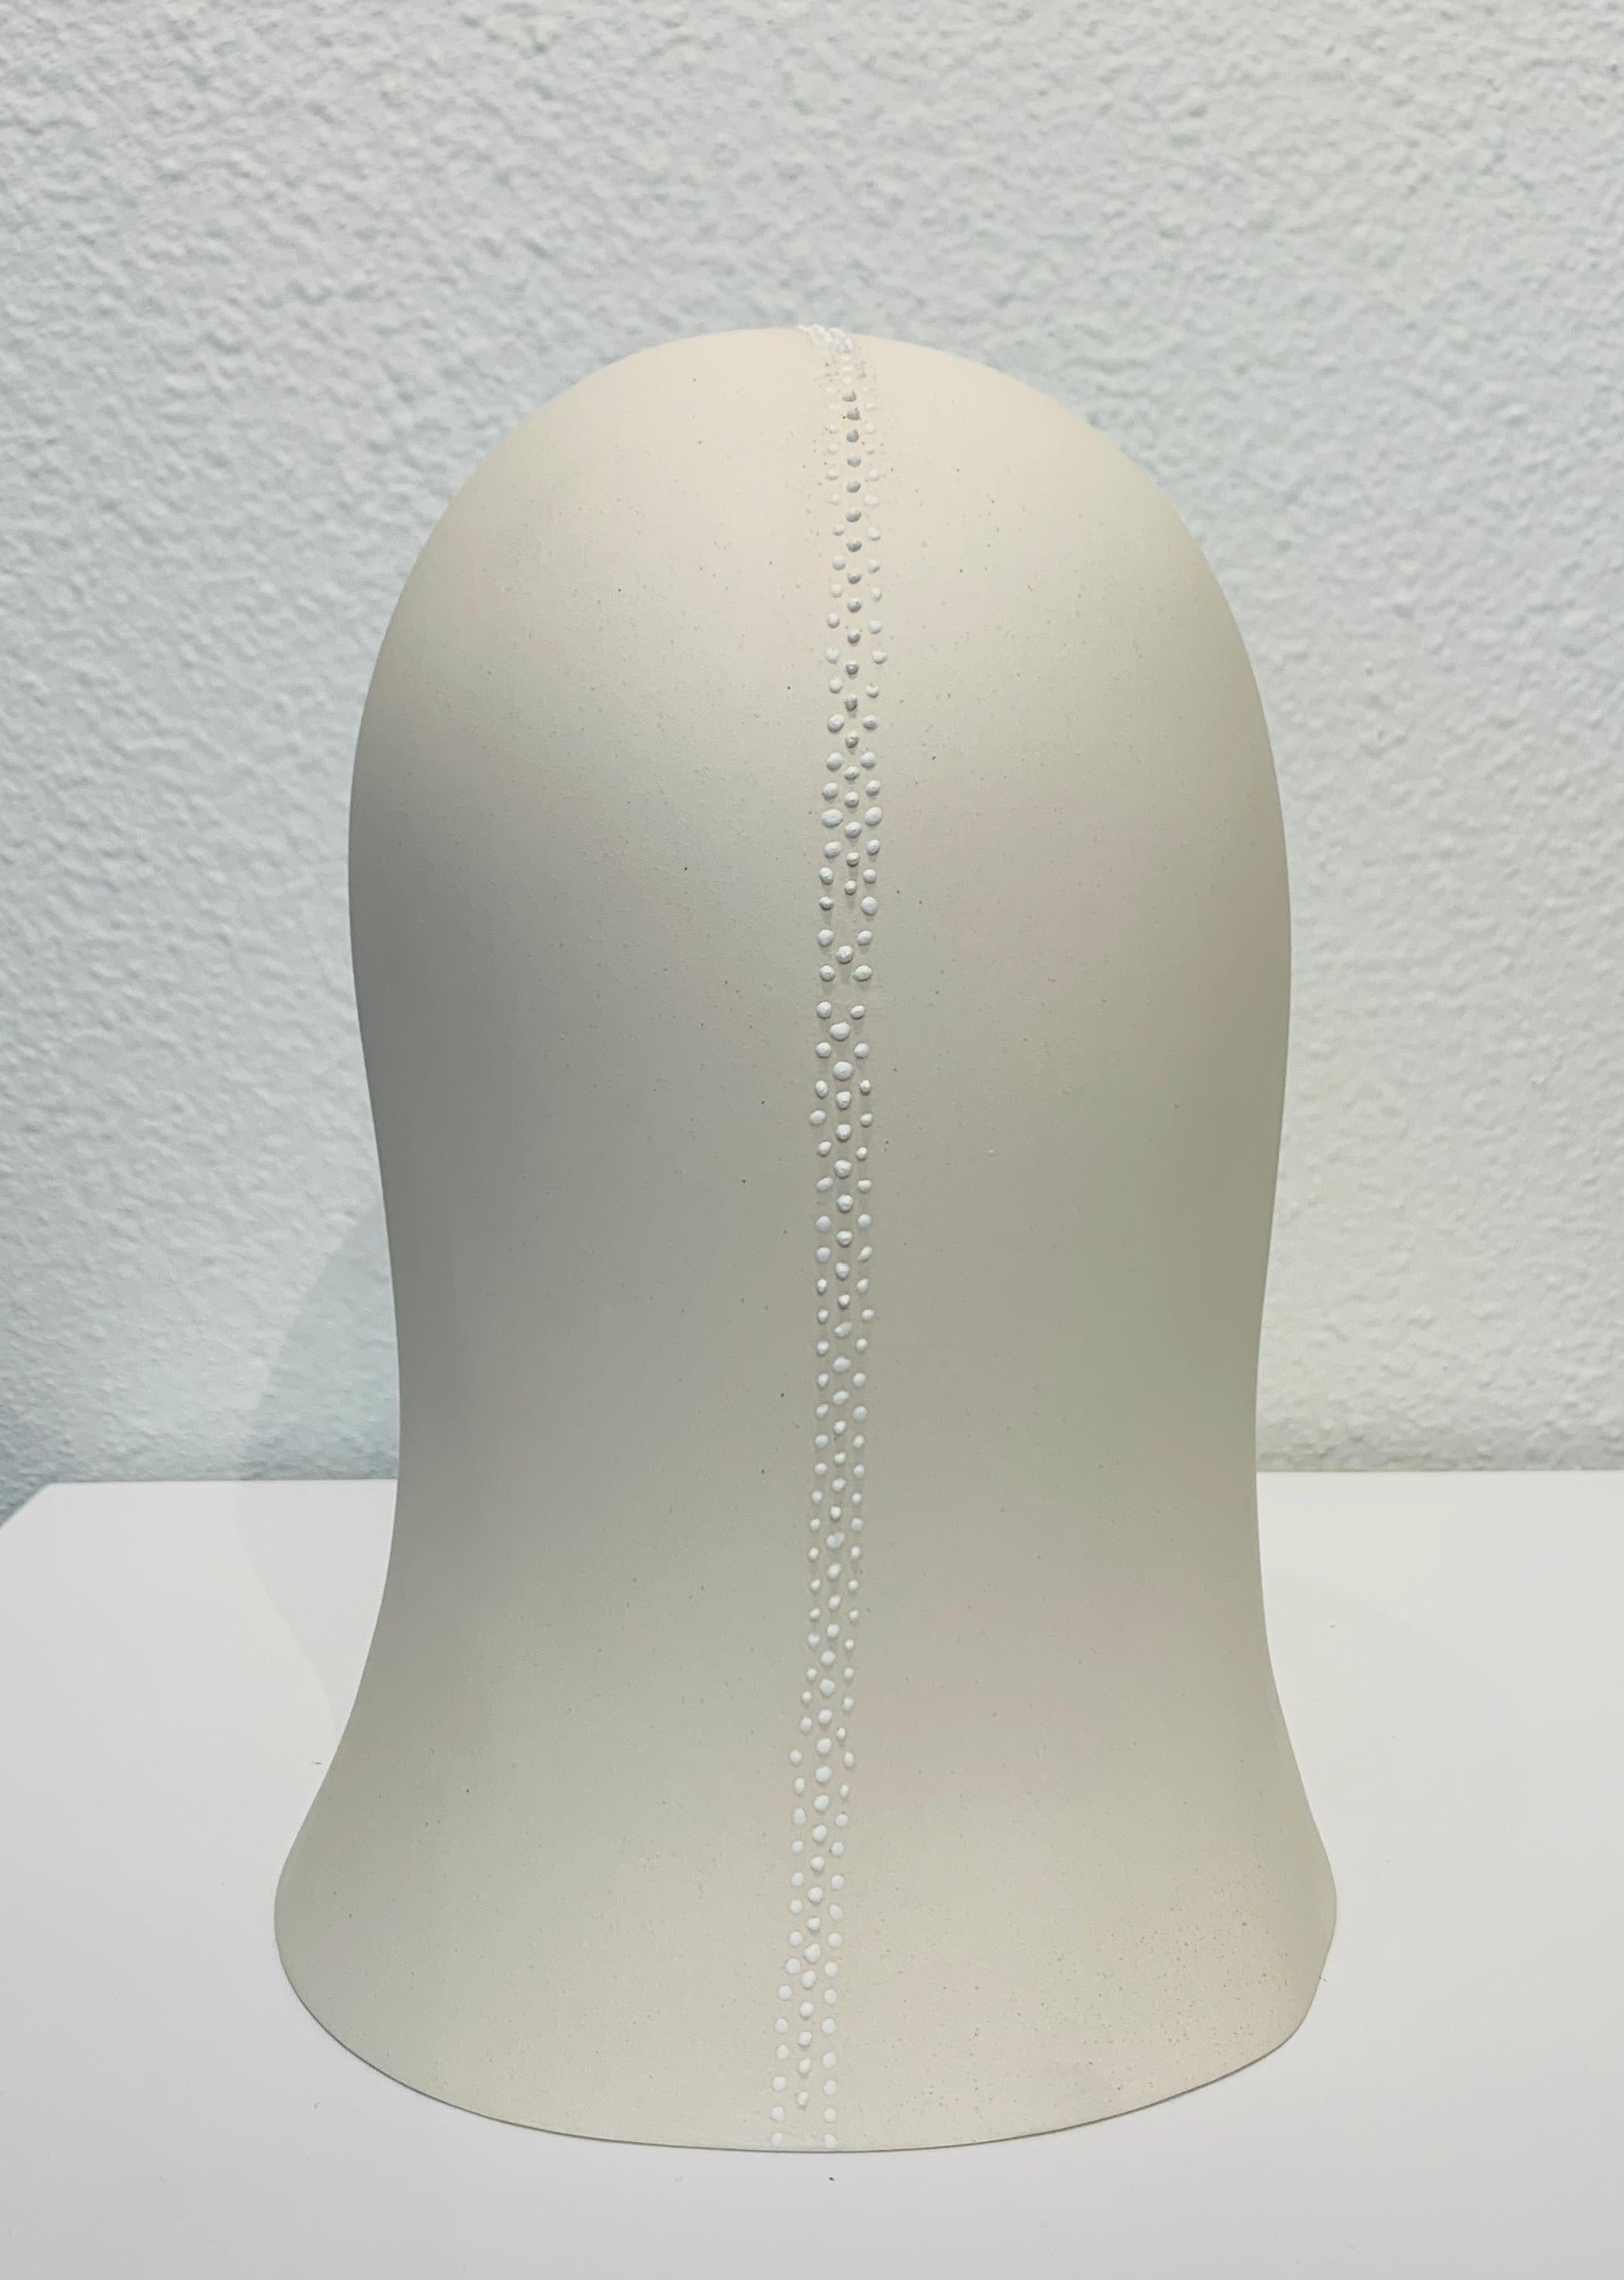 Fasten Veil, Chloe Rizzo Sculpture Porcelain Glaze White Female Bondage Zipper 1